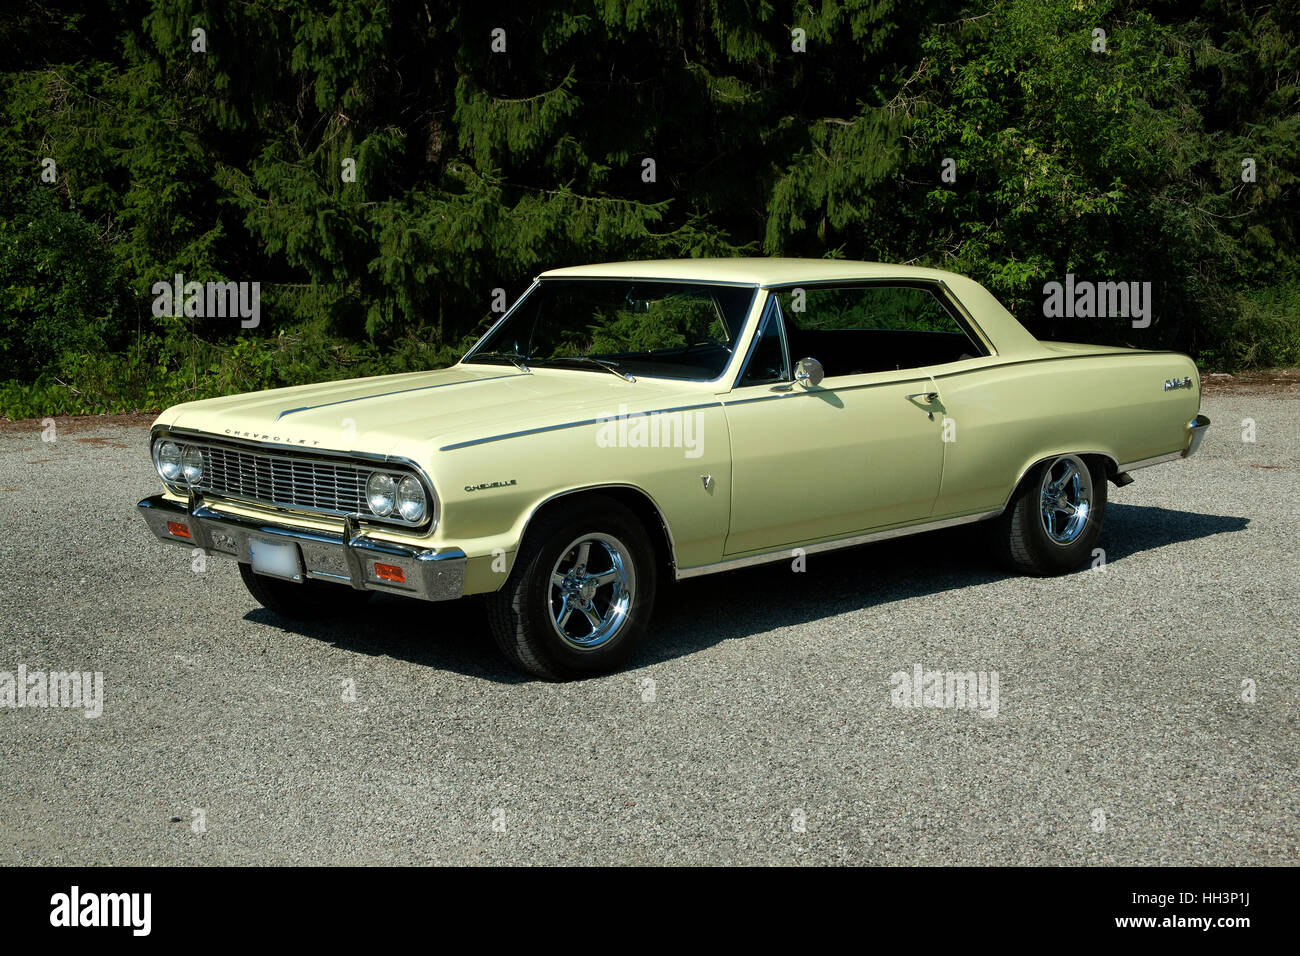 Chevrolet malibu ss -Fotos und -Bildmaterial in hoher Auflösung – Alamy